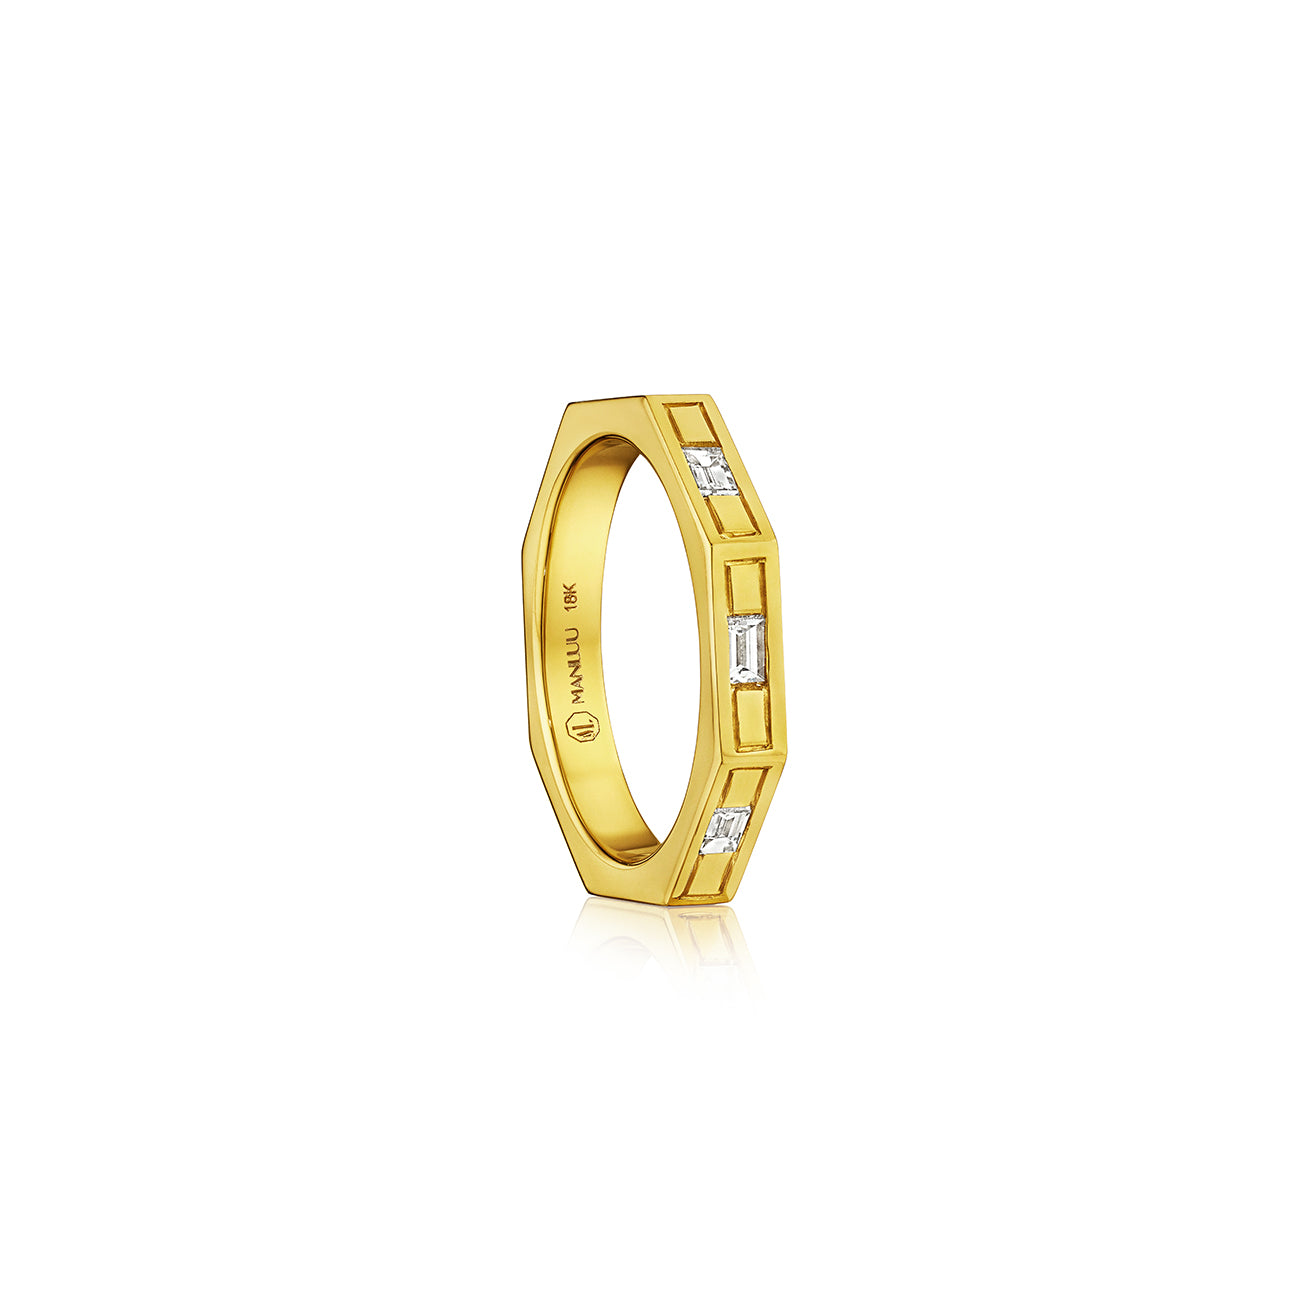 Ti Narrow Ring, 18K Yellow Gold and Baguette Diamonds